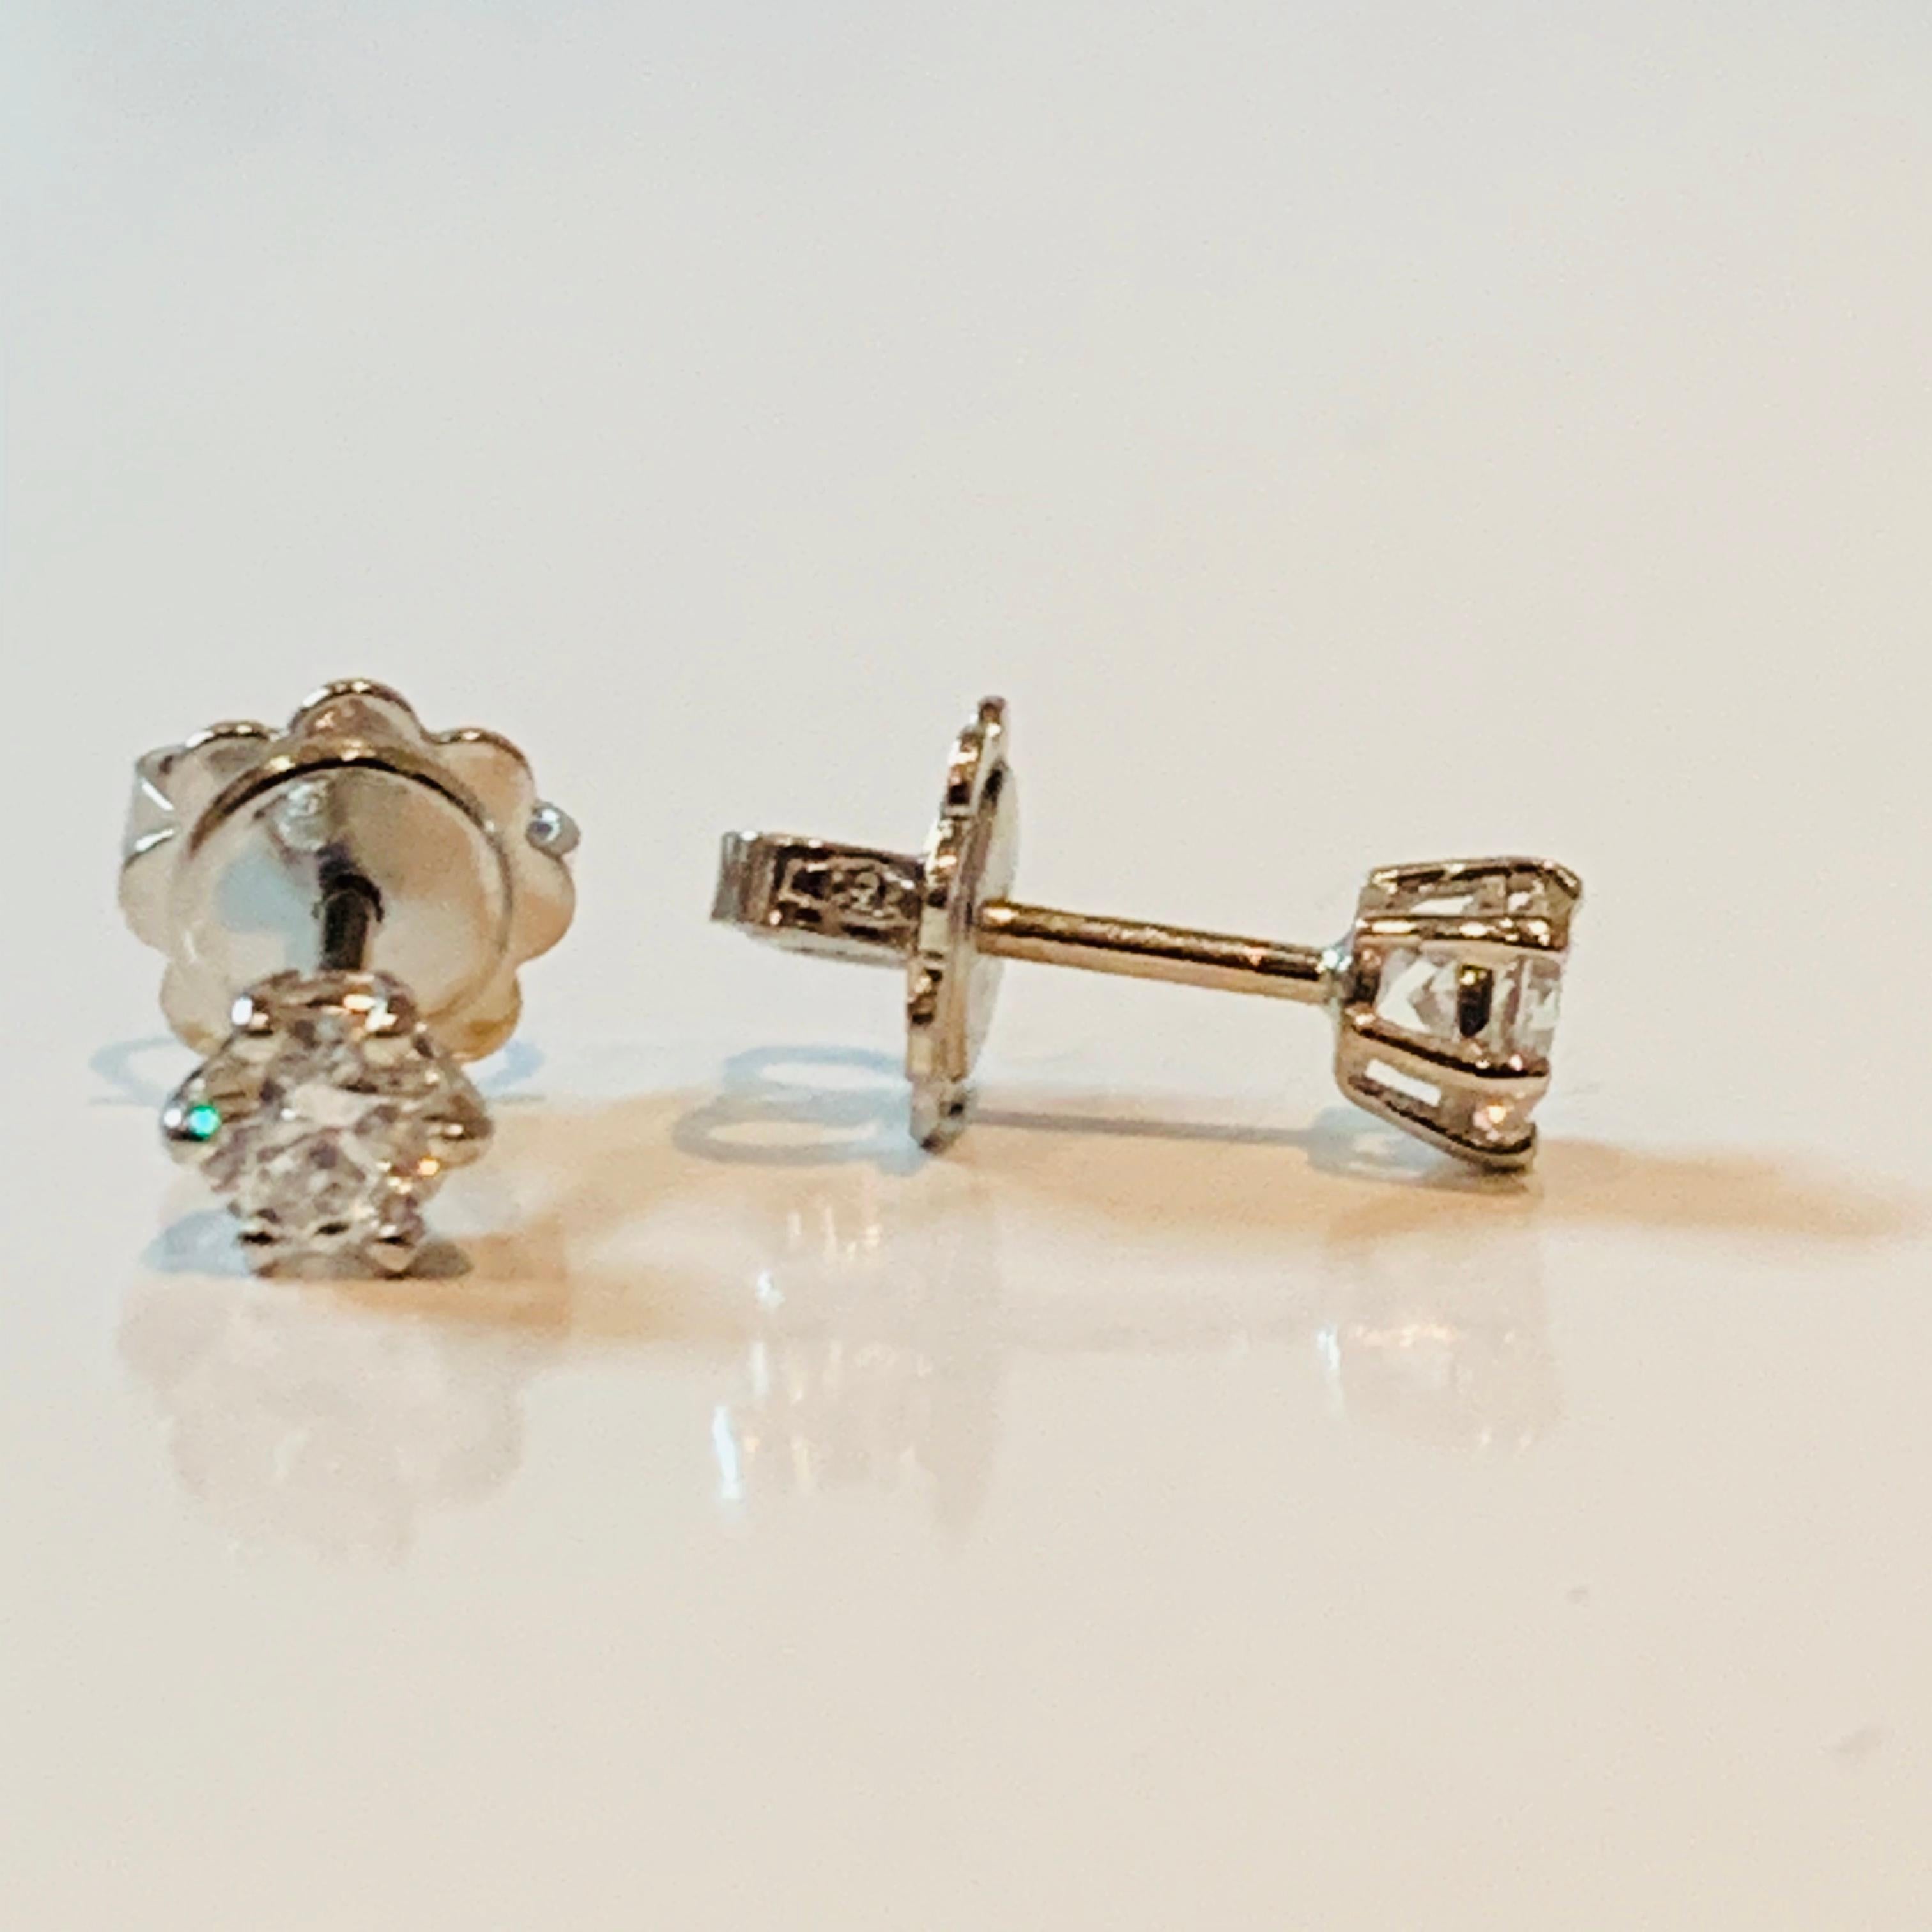 Round Cut HRD Certified 0.50 Carat Star Diamonds Set in 18Kt White Gold Stud Earrings